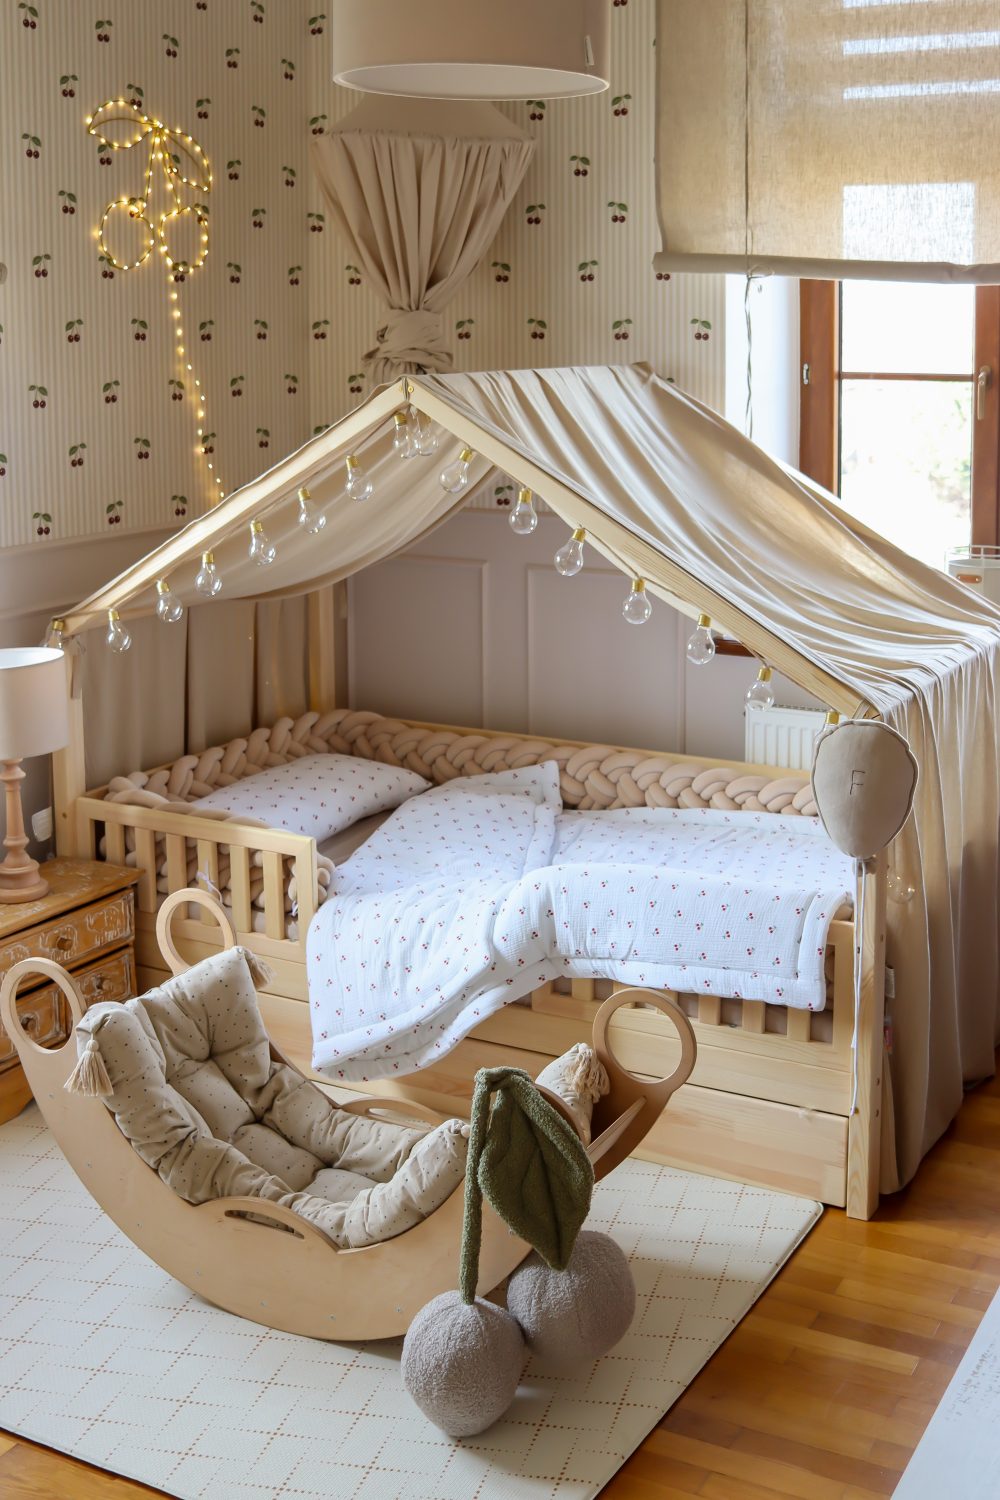 Curtains/canopy for a house bed - Gajka